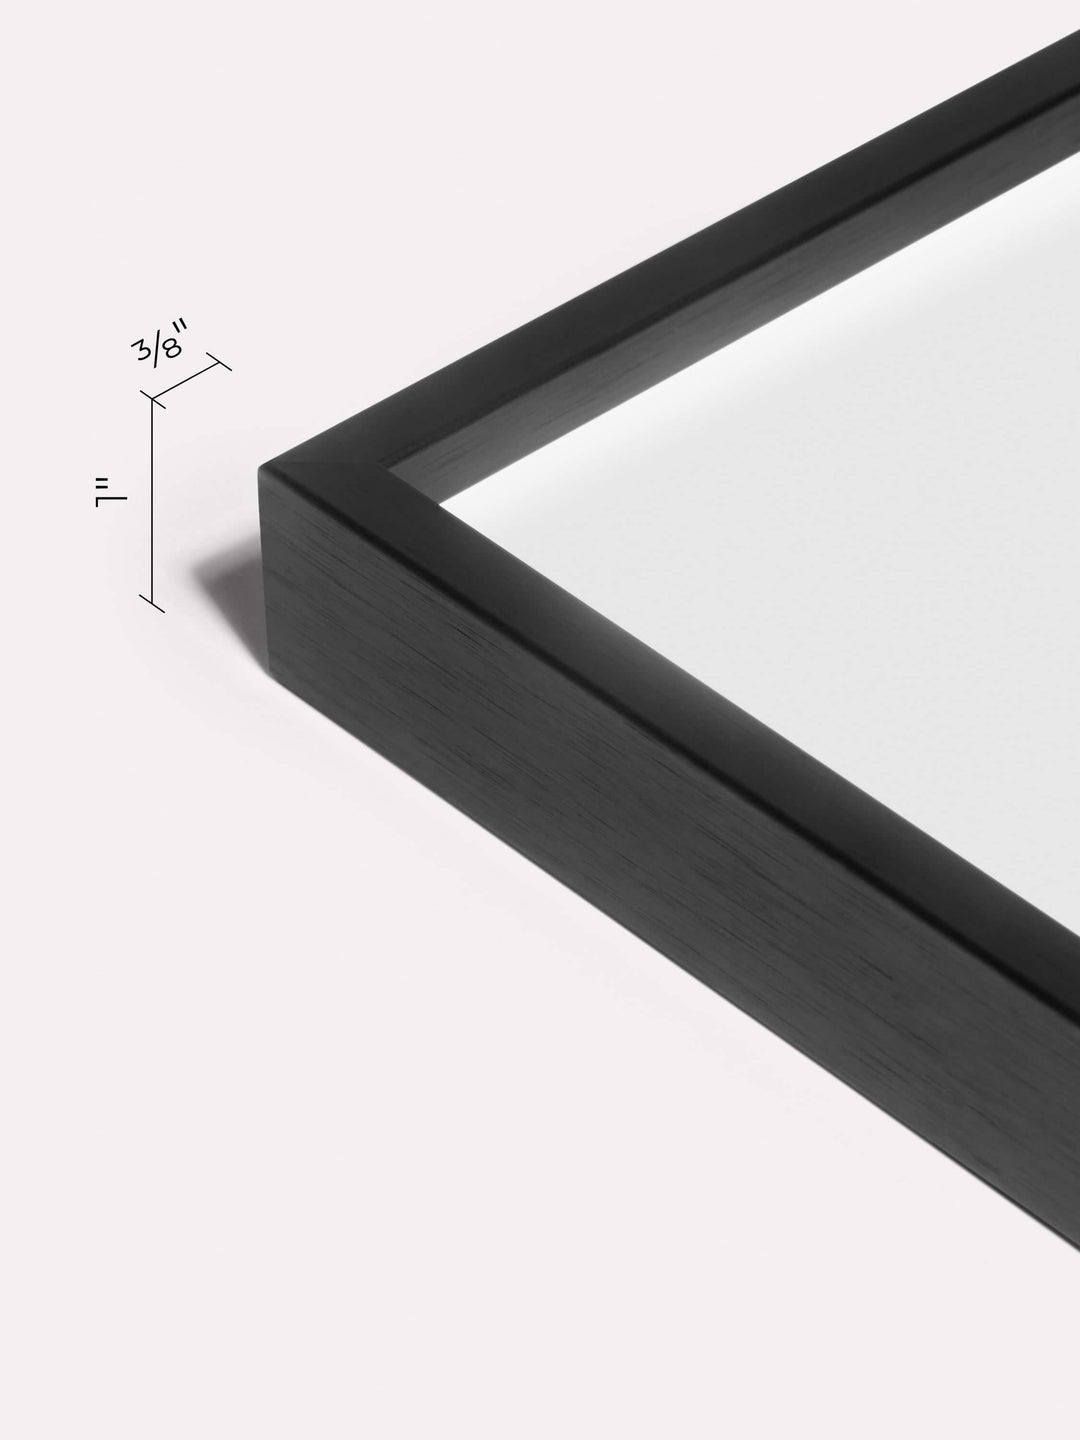 24x30-inch Thin Frame, Black - Close-up view